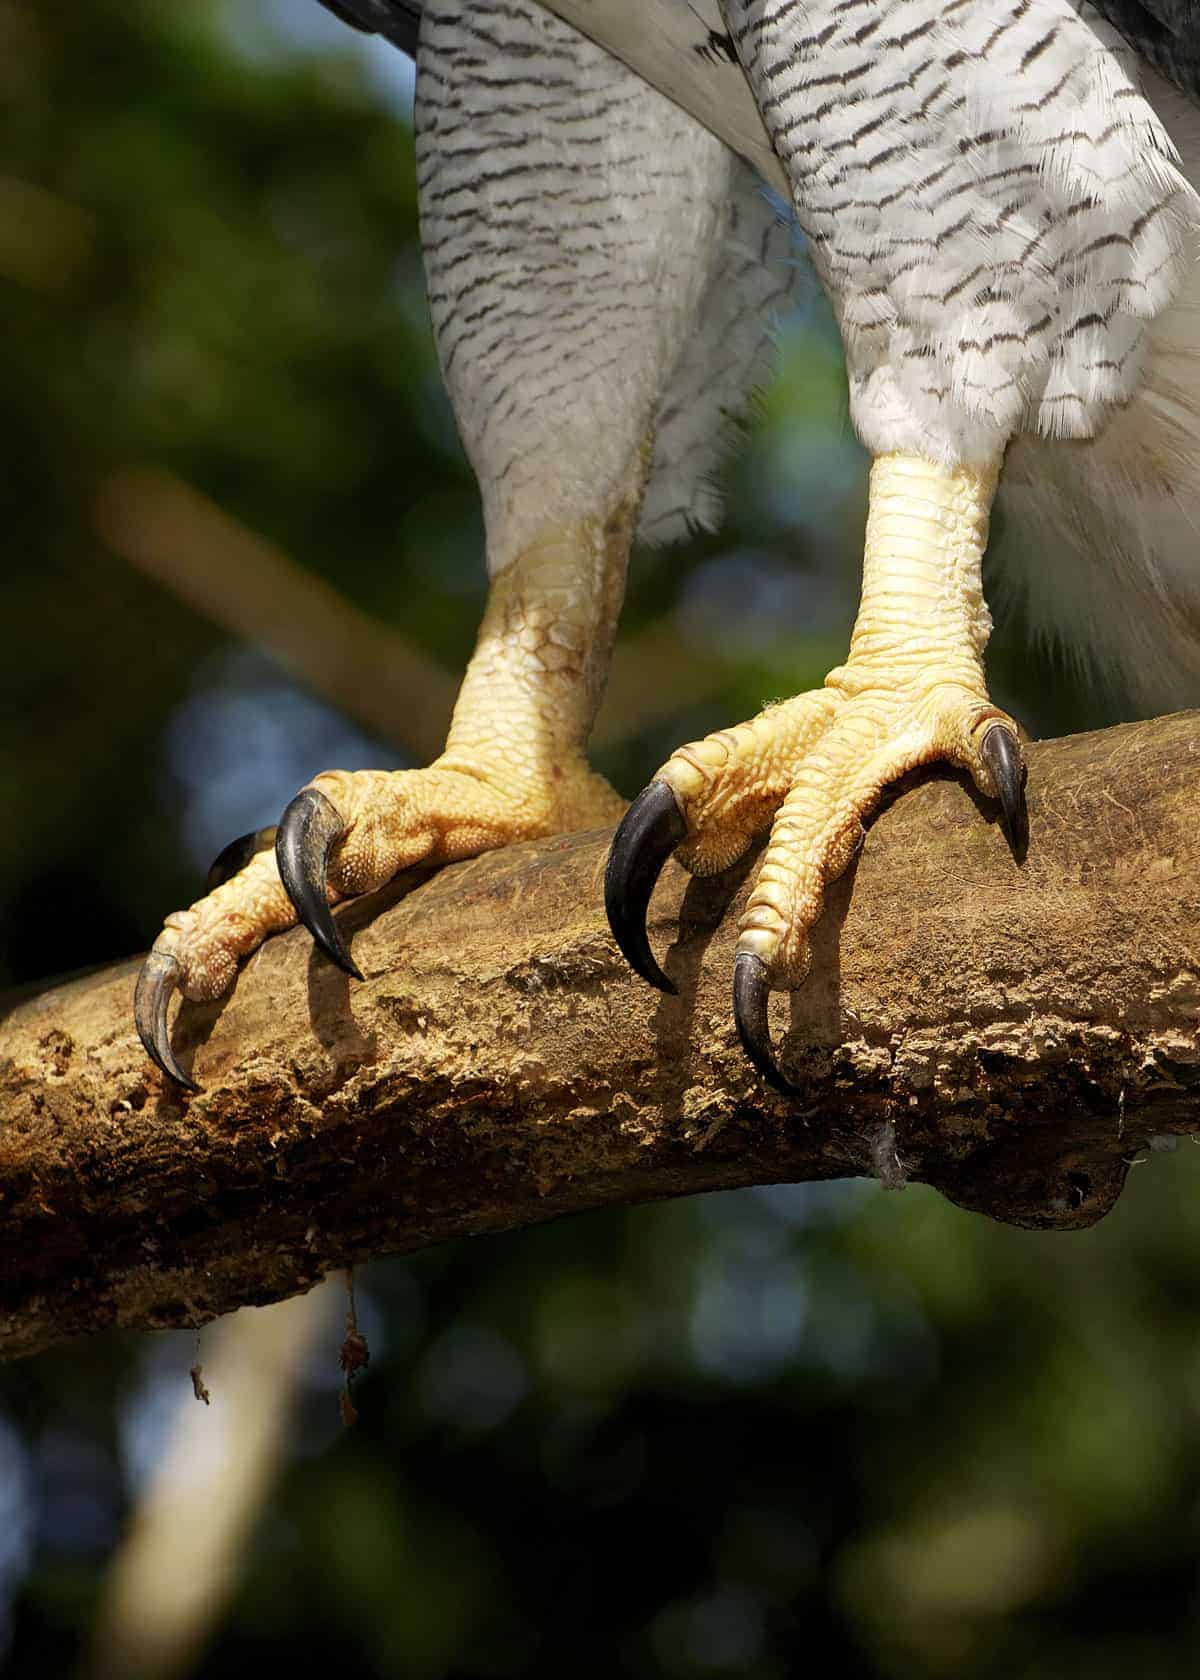 Harpy eagle size